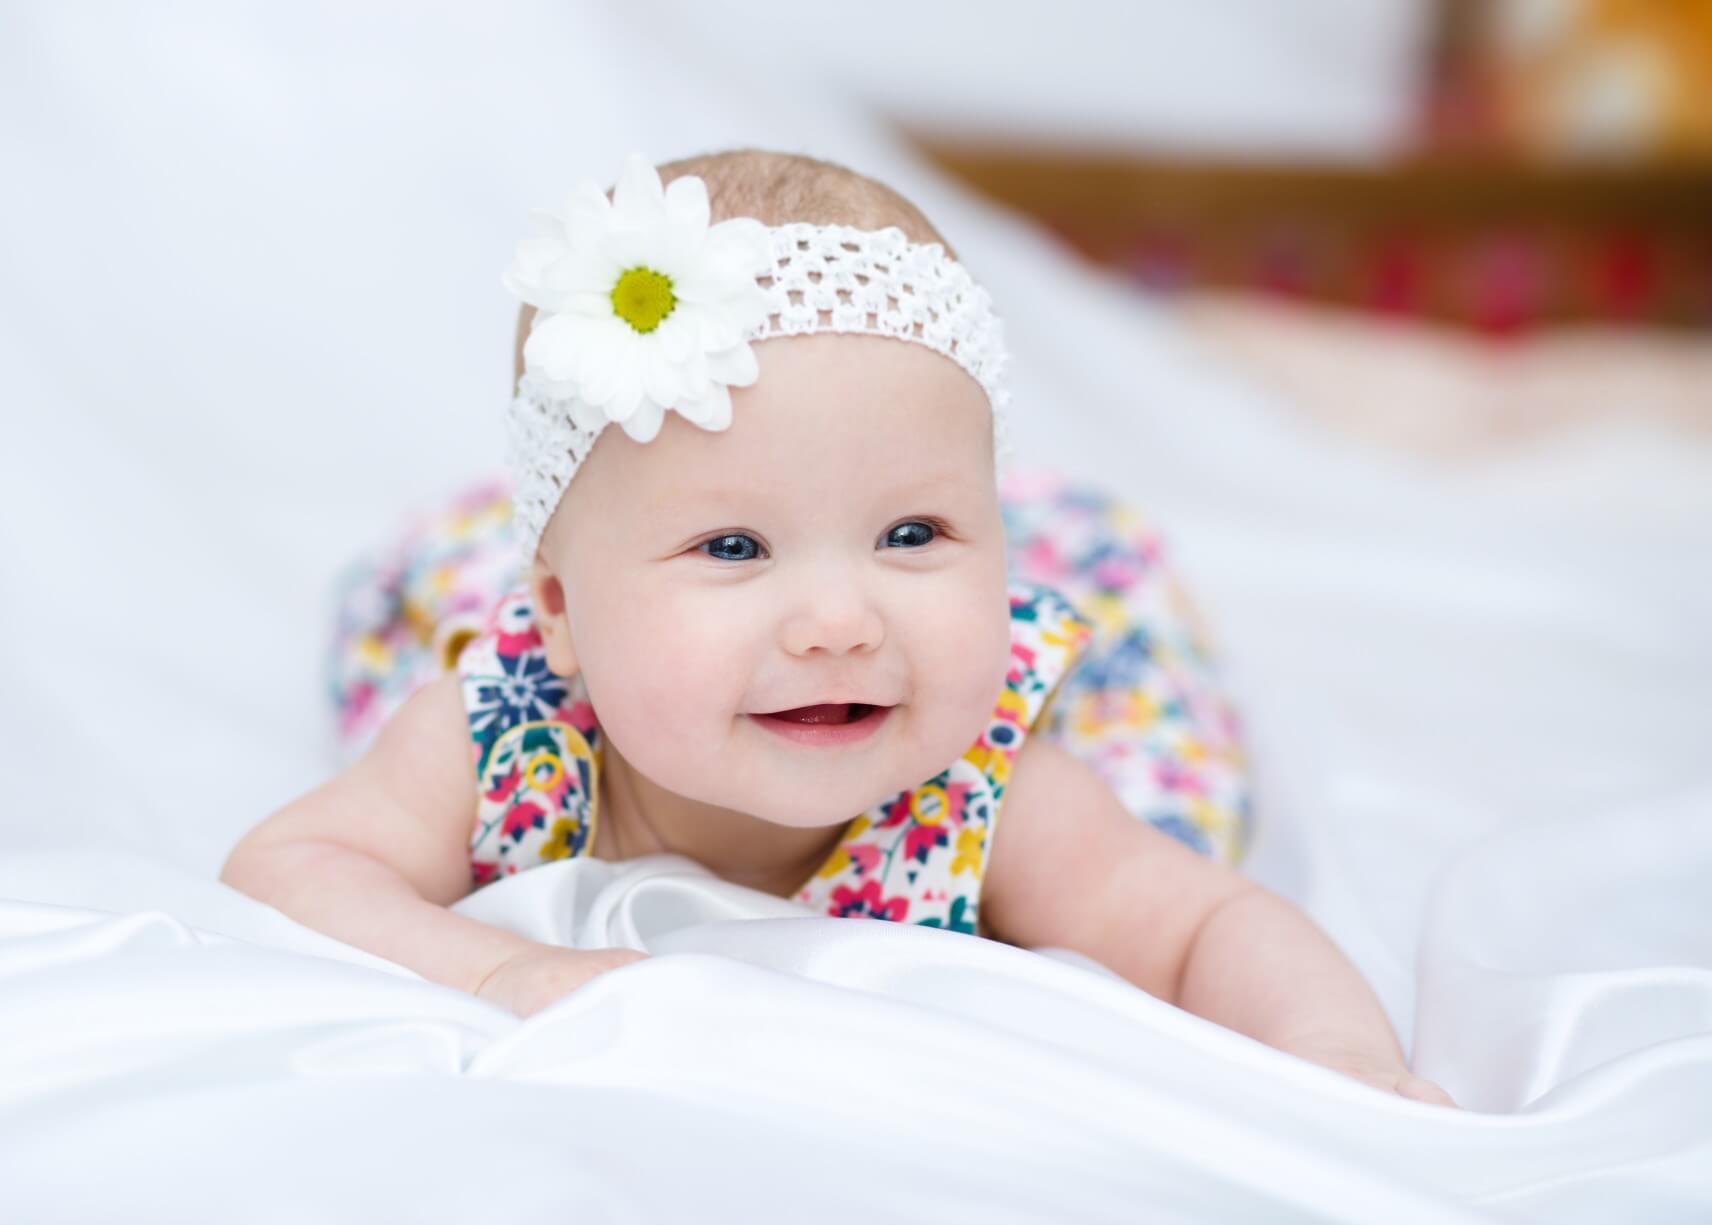 Bayi Usia 5 Bulan: si Kecil Makin Ekspresif dan Komunikatif dengan Bunda Loh!